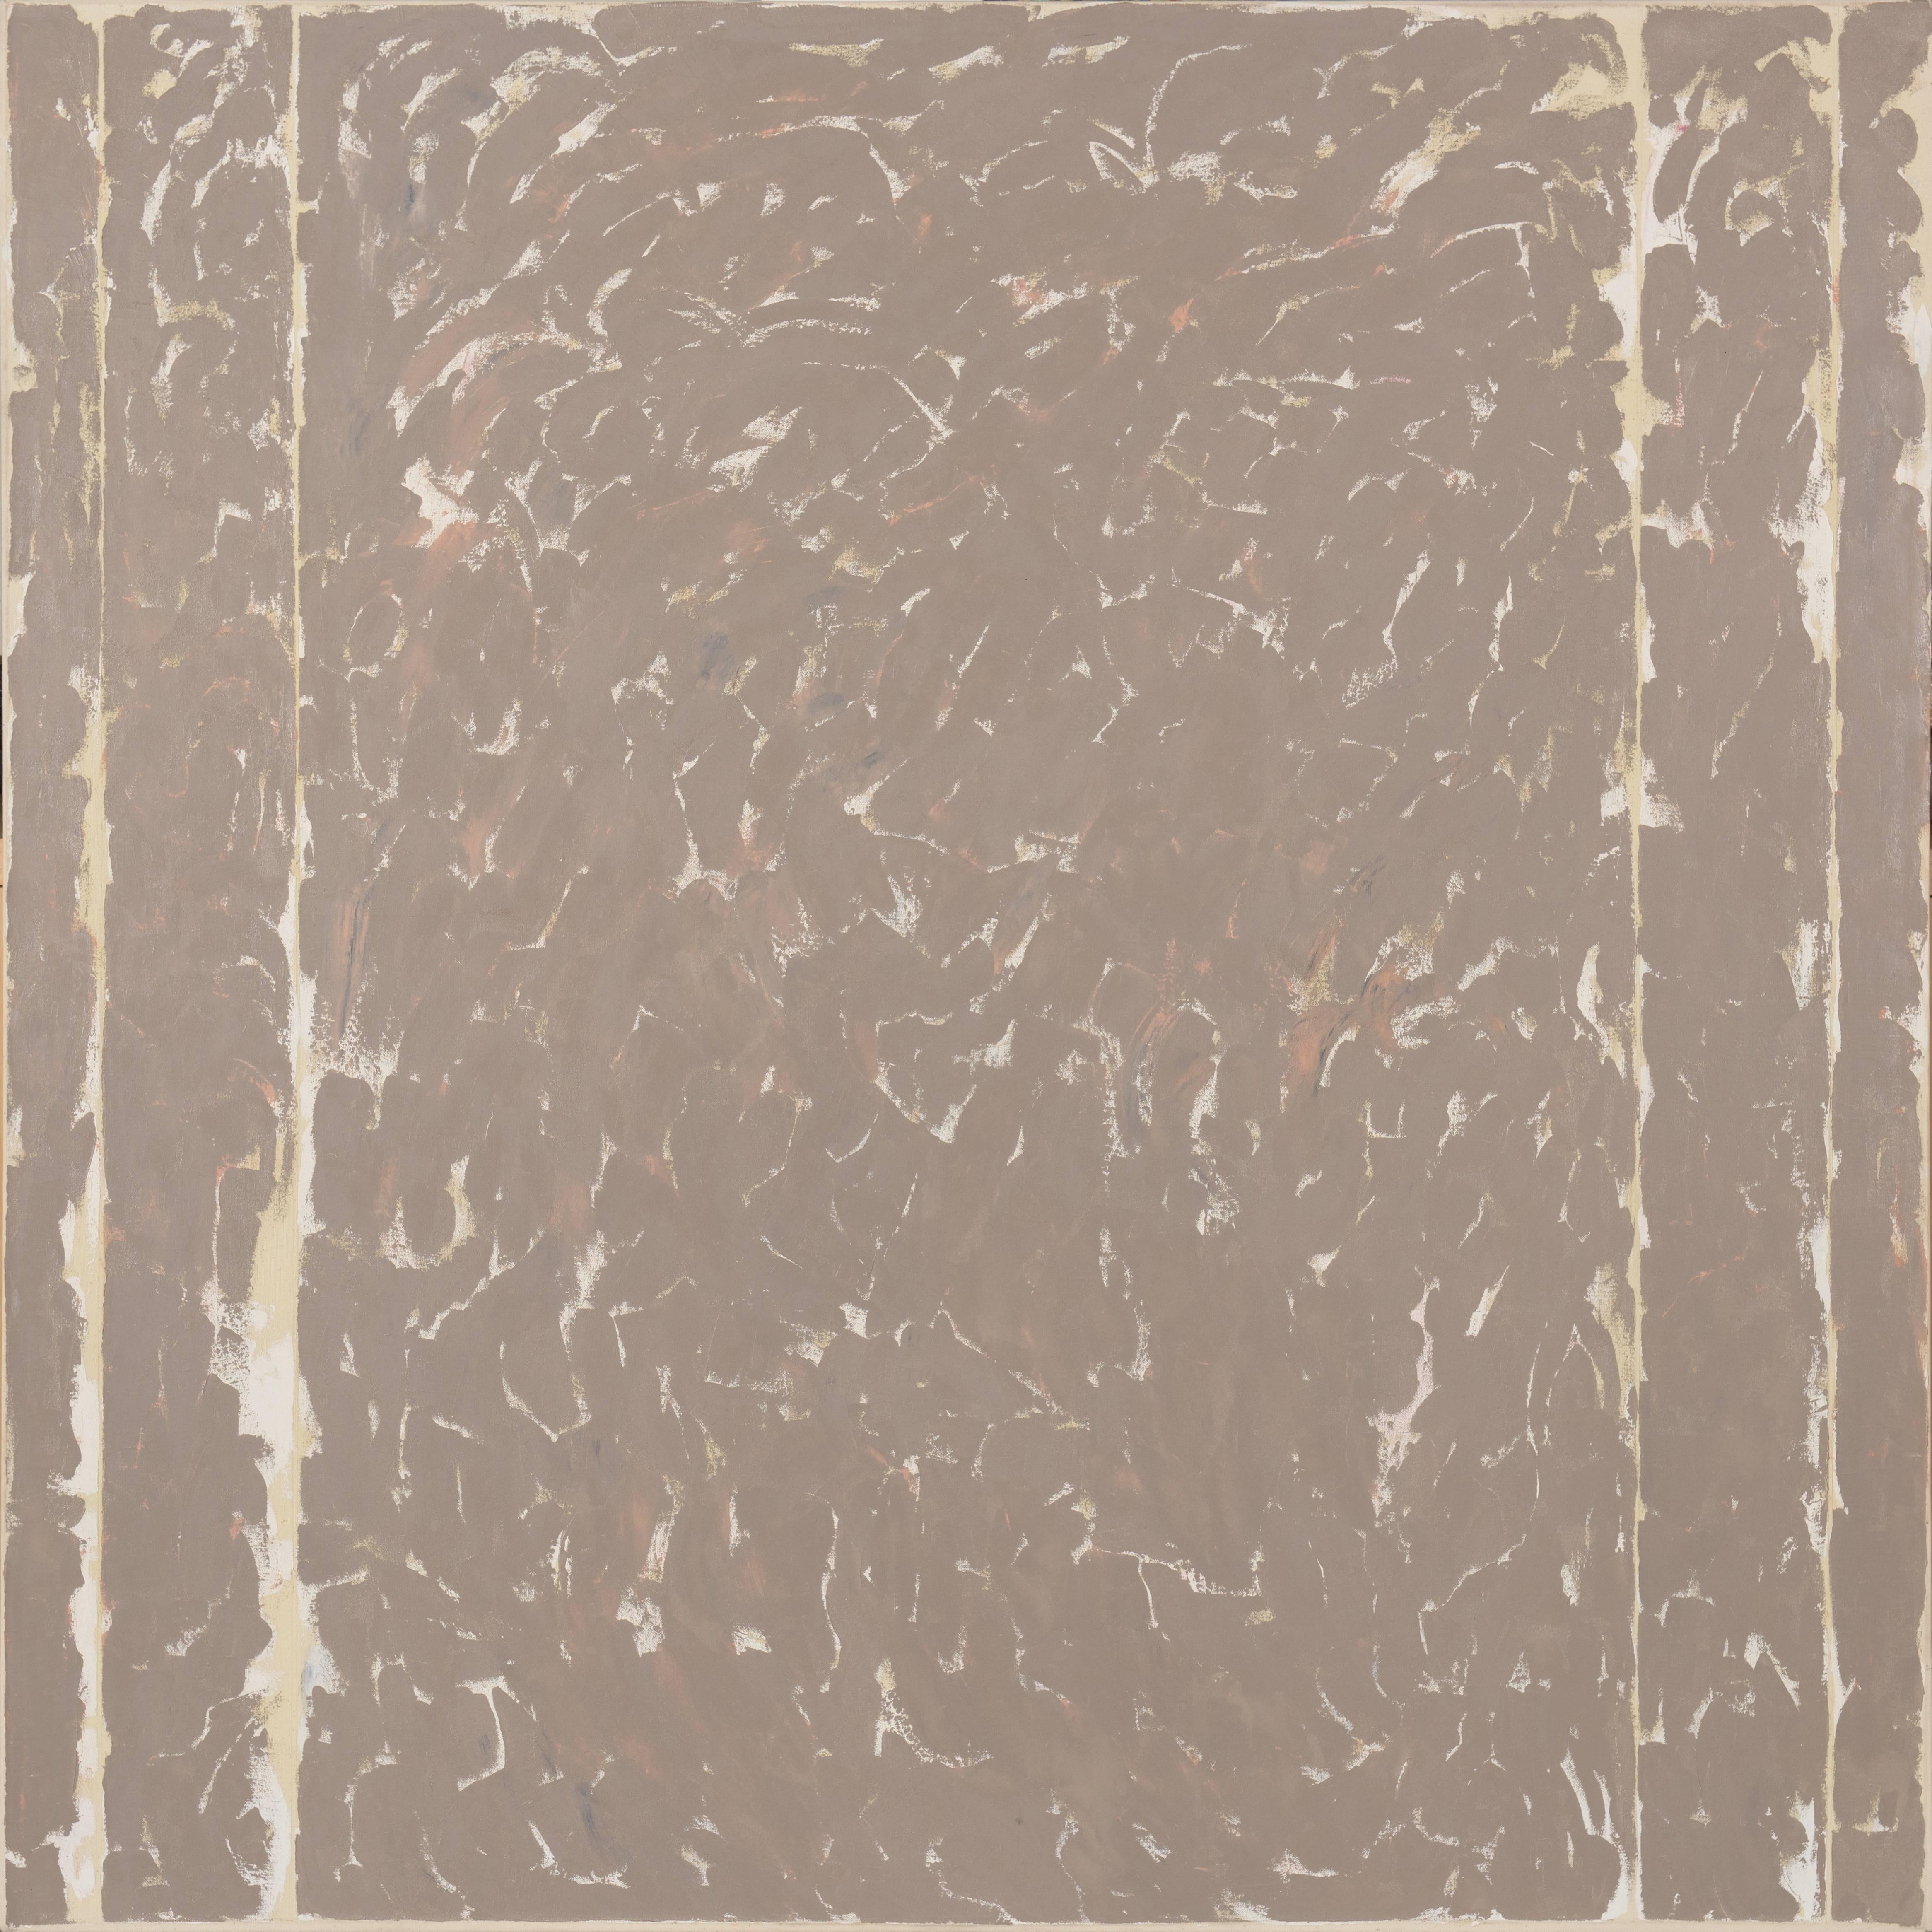 Mala Breuer Abstract Painting - 7.79 (grey)